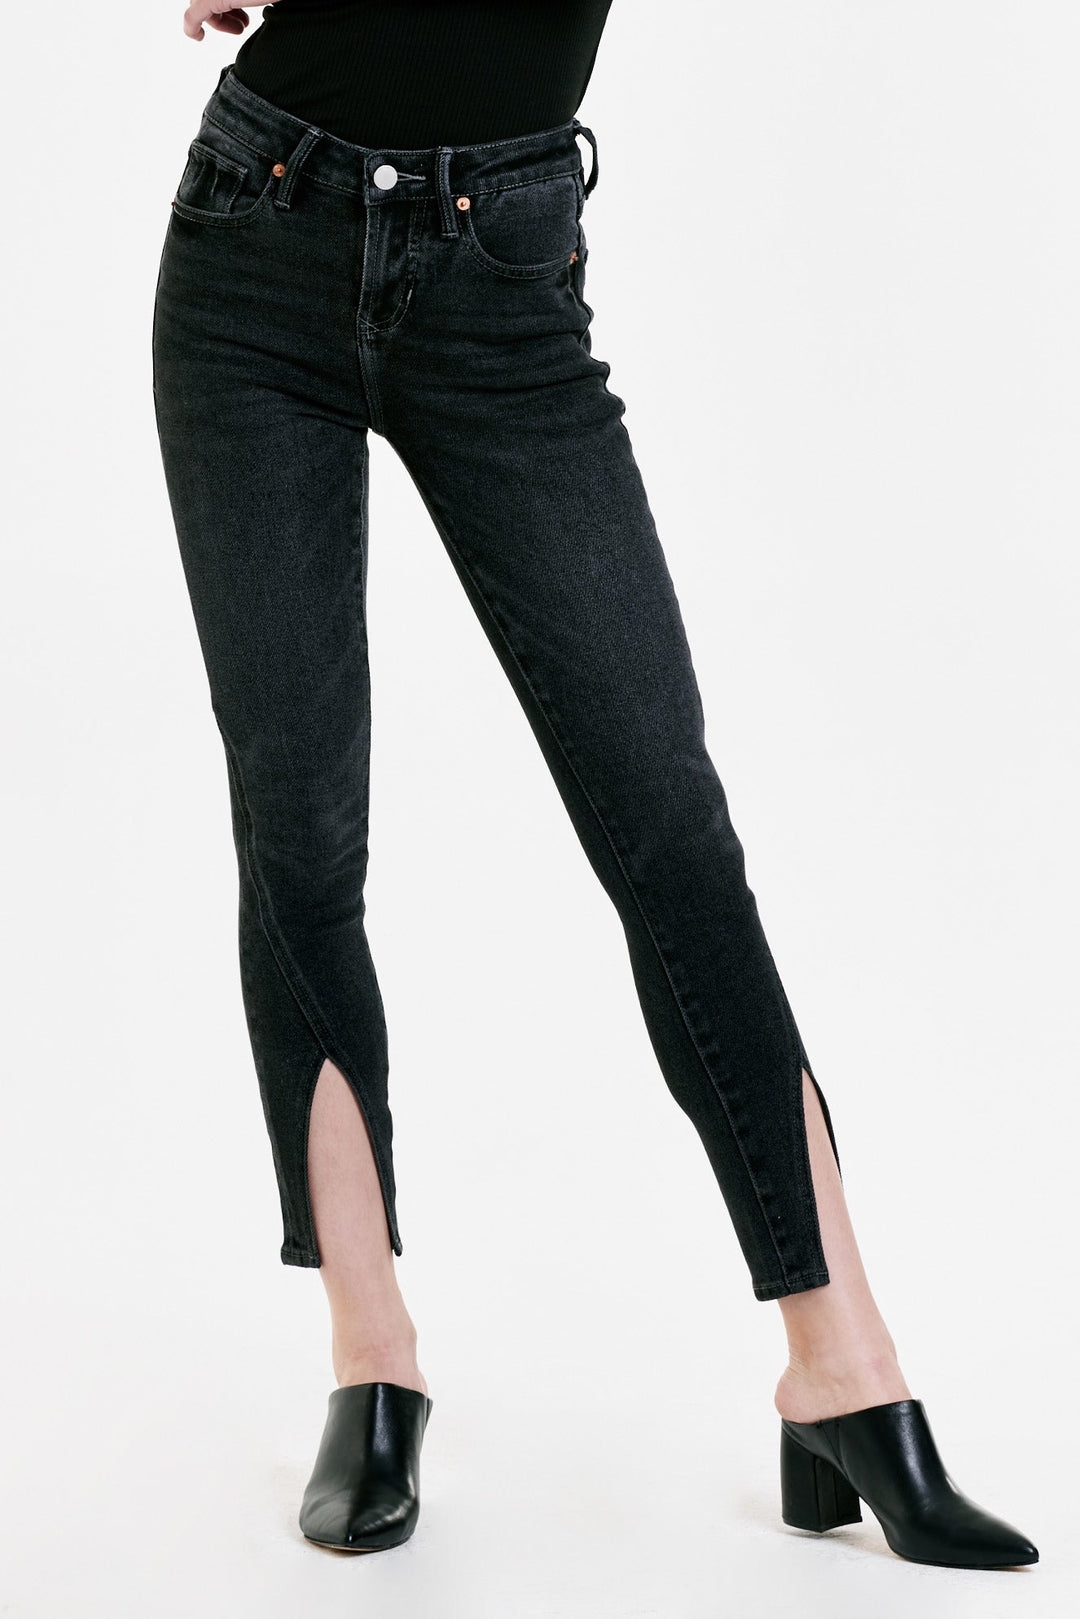 ember-high-rise-skinny-jeans-kenwood